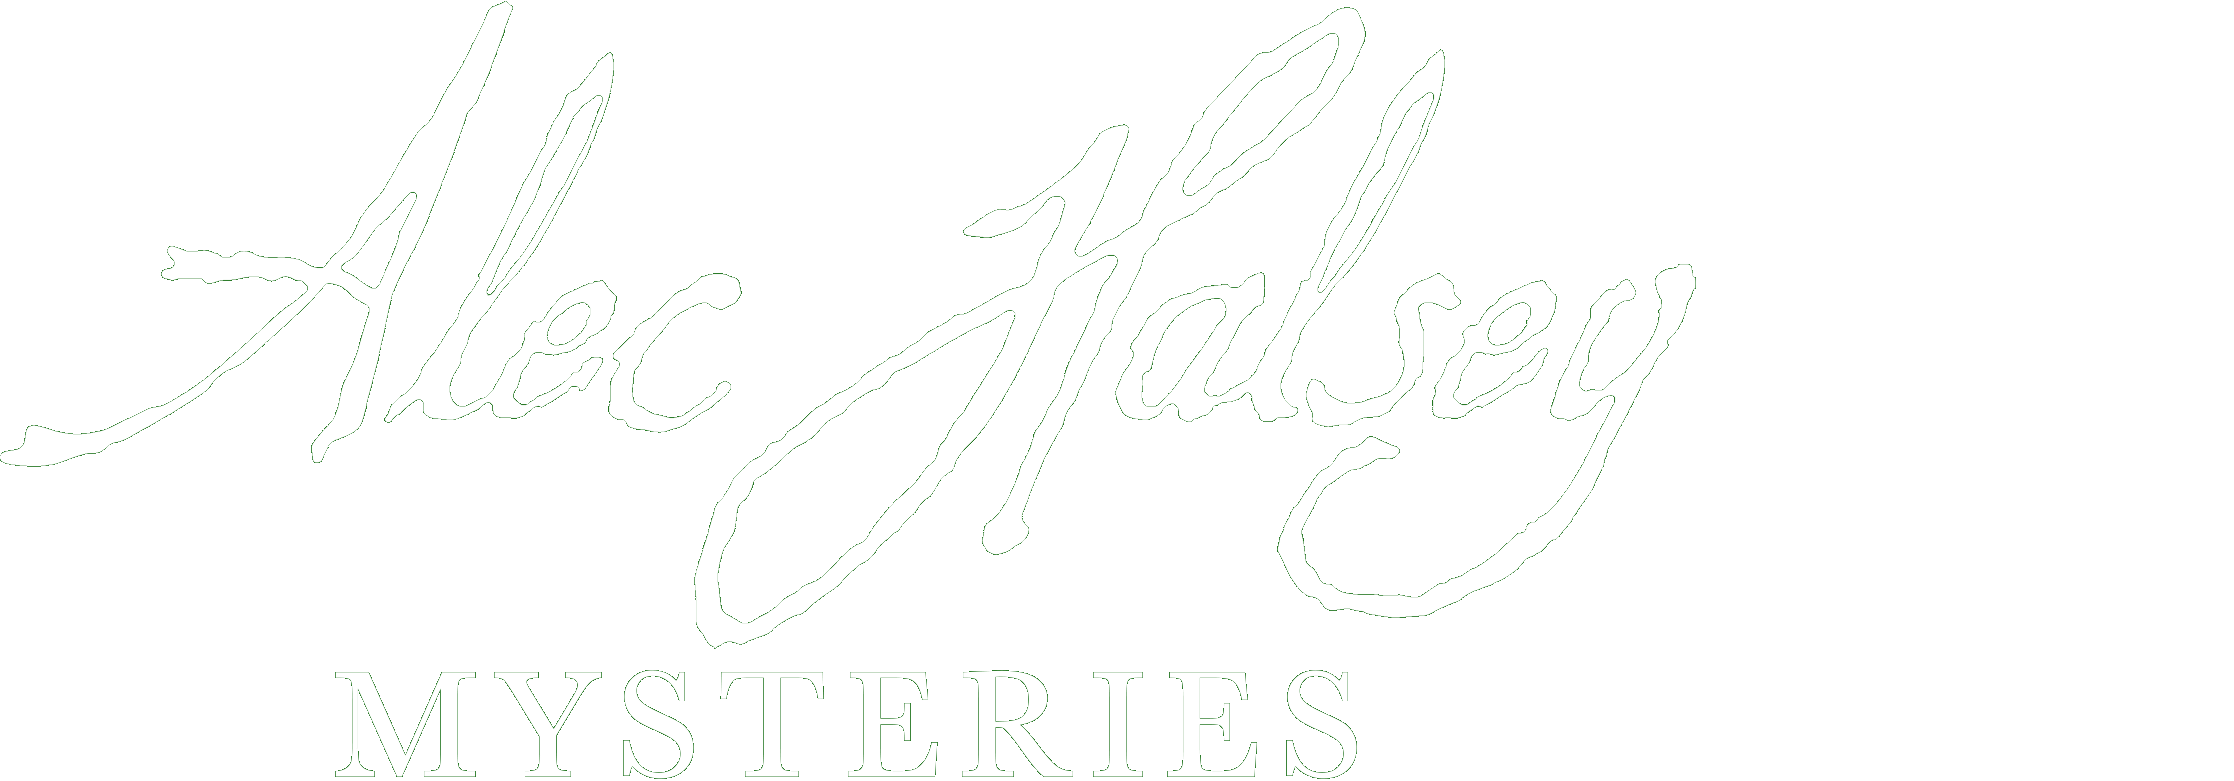 Alec Halsey Mysteries